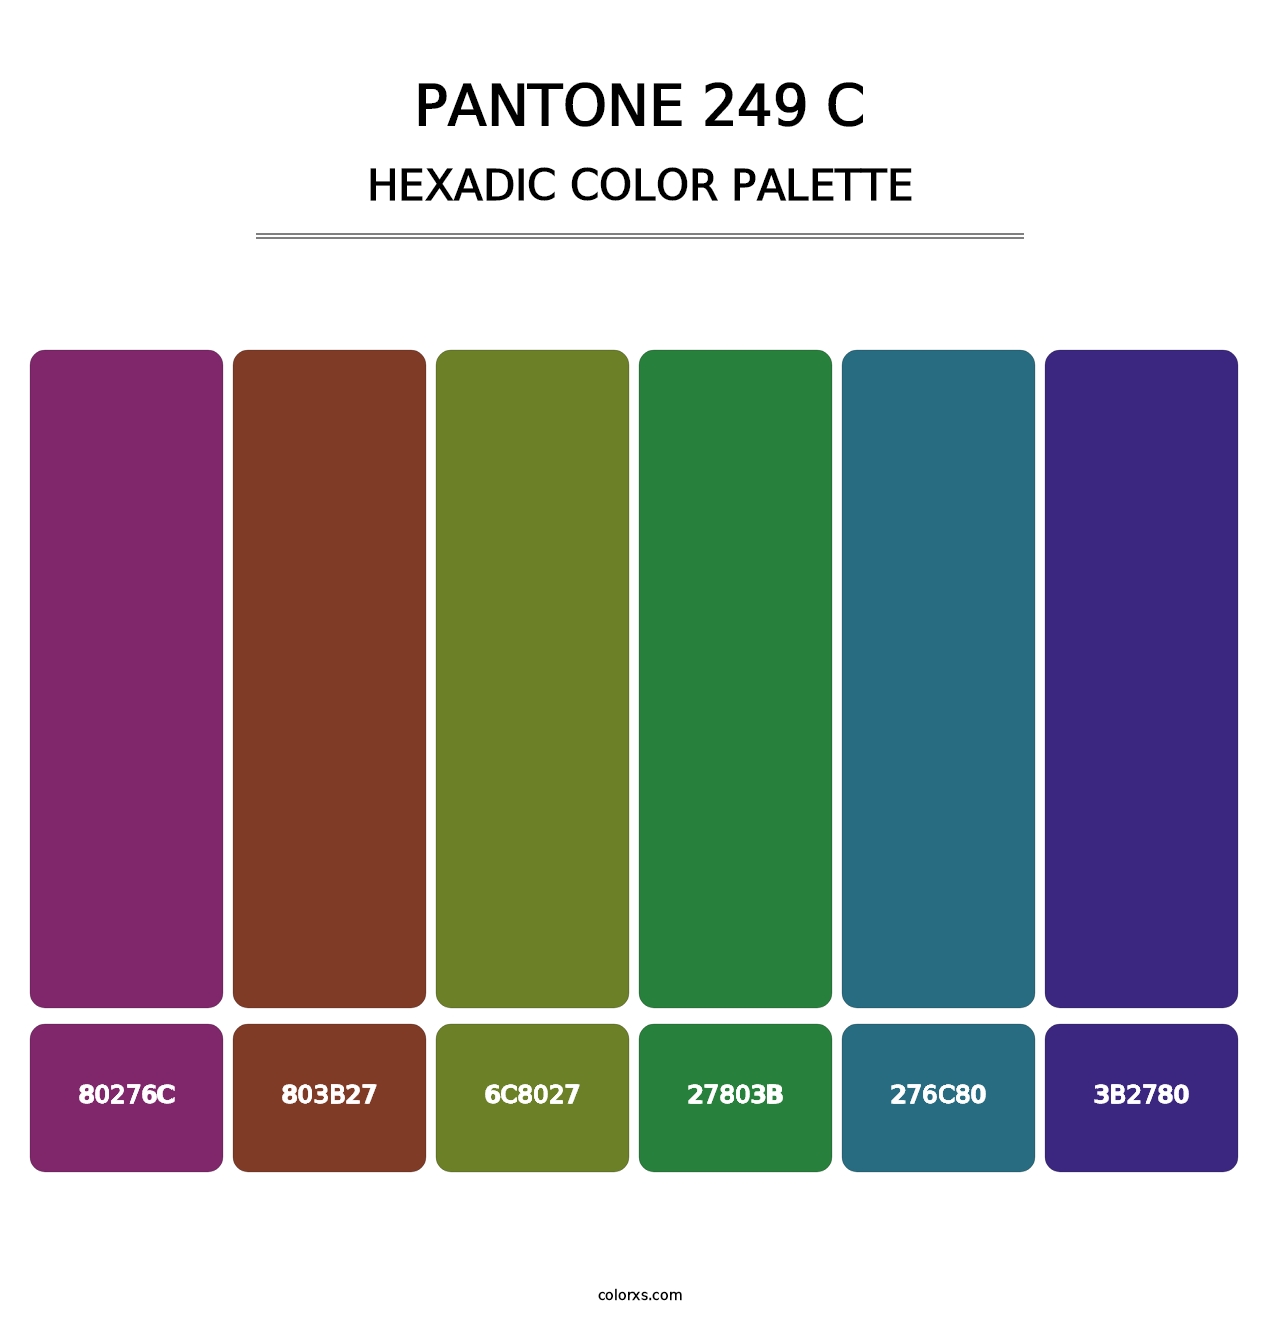 PANTONE 249 C - Hexadic Color Palette